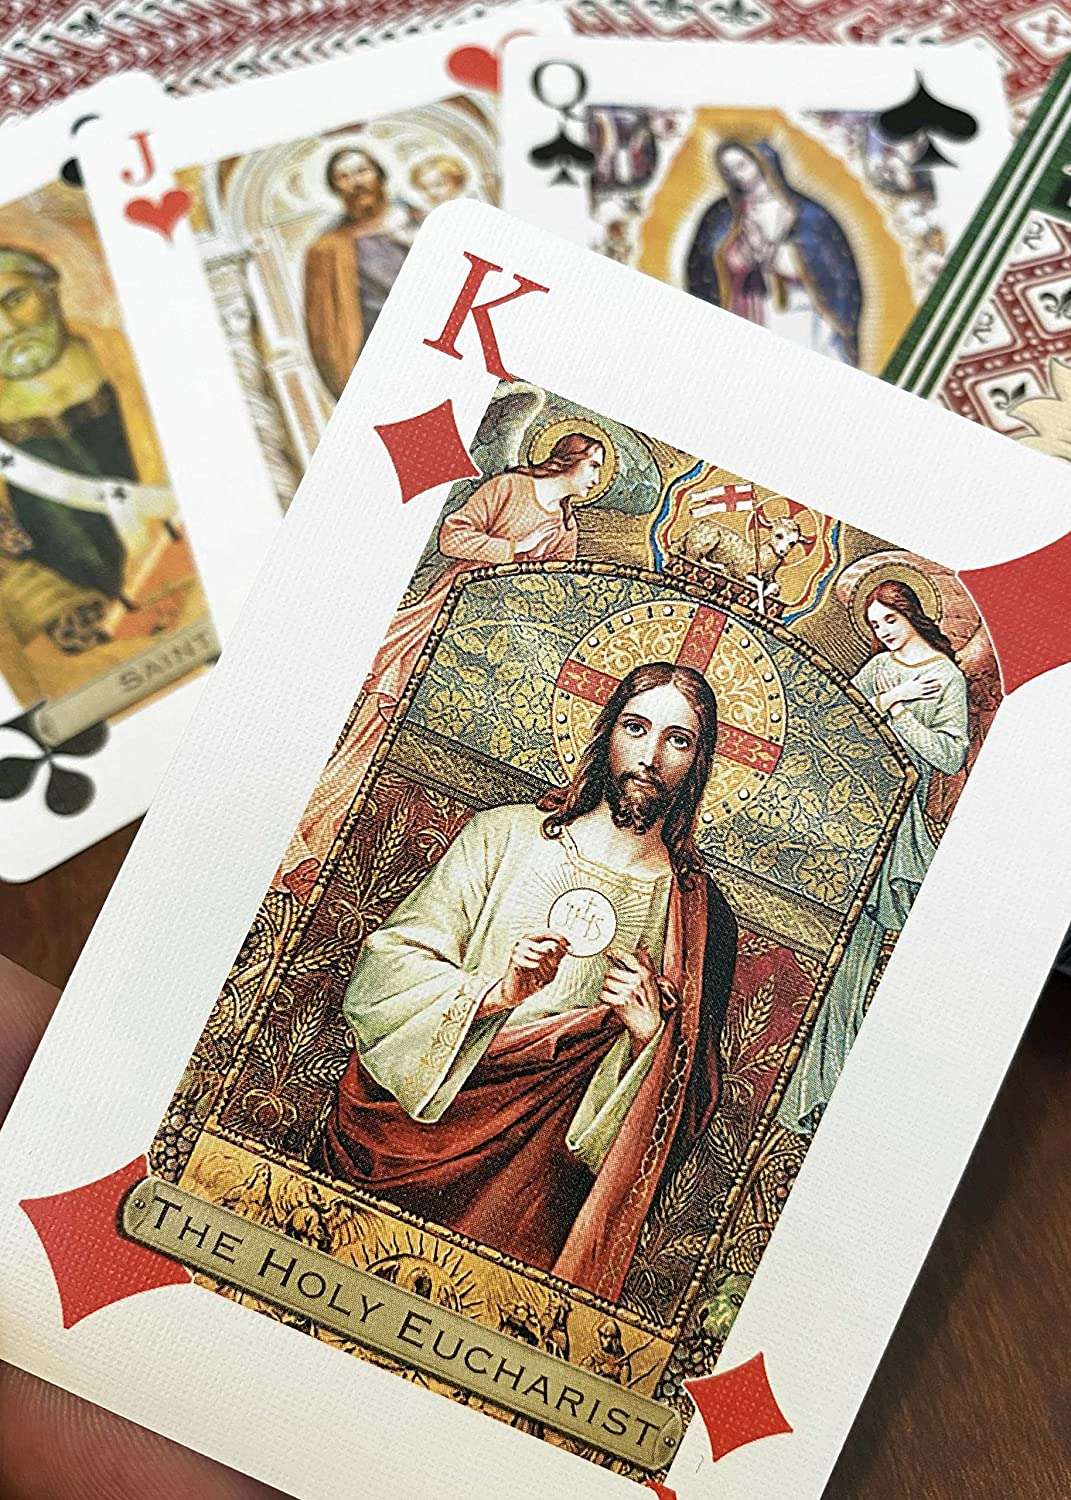 PlayingCardDecks.com-Holy Saints Playing Cards